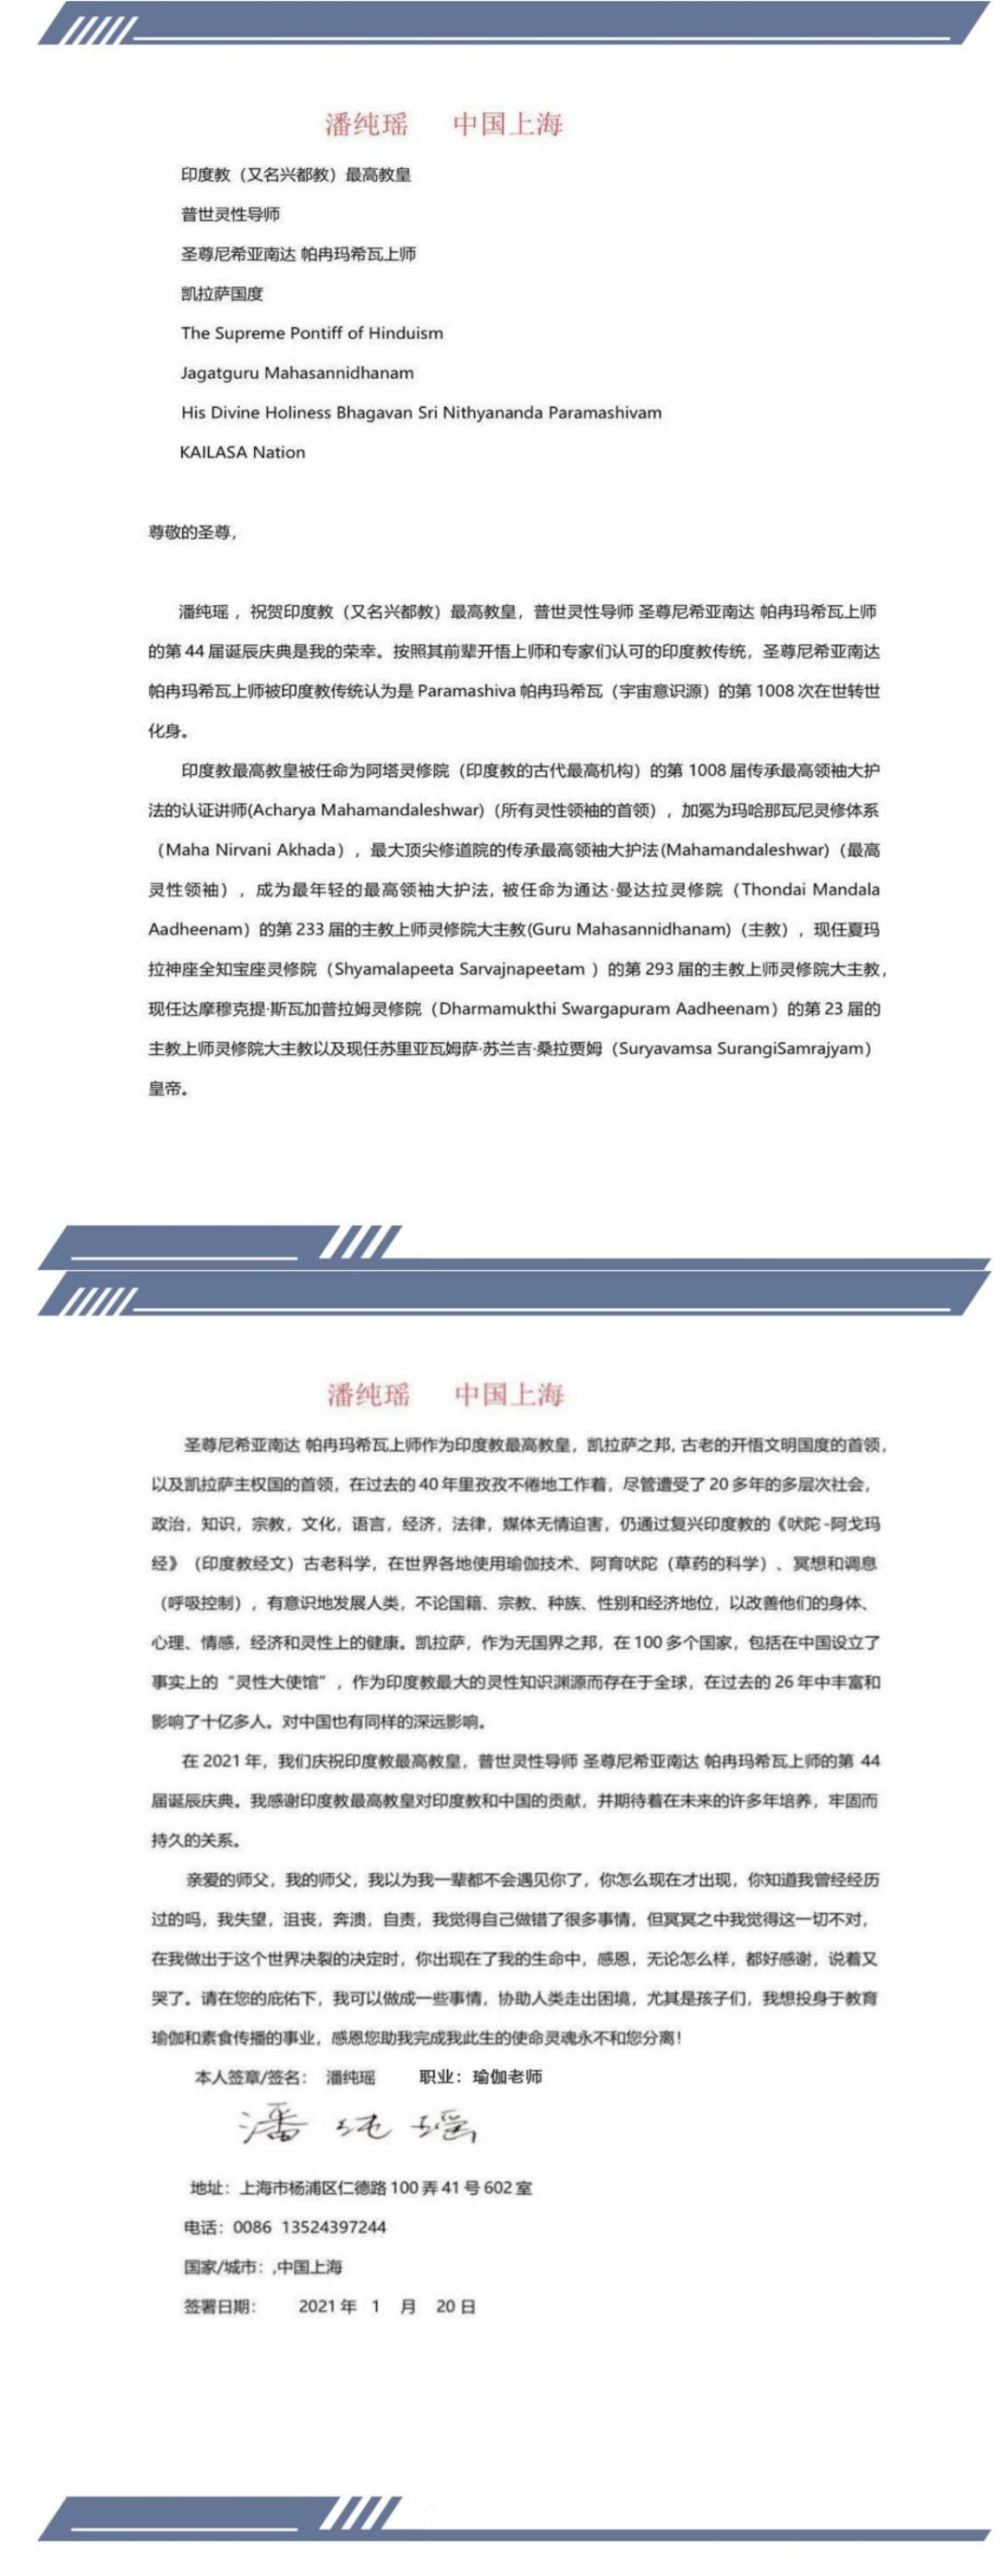 China---Chun-Yao-Pan---20-Jan-2021-(Proclamation)-1q60RFBKyKVCo7Xa6gJ-VyMXE6Kuvbh3R.pdf